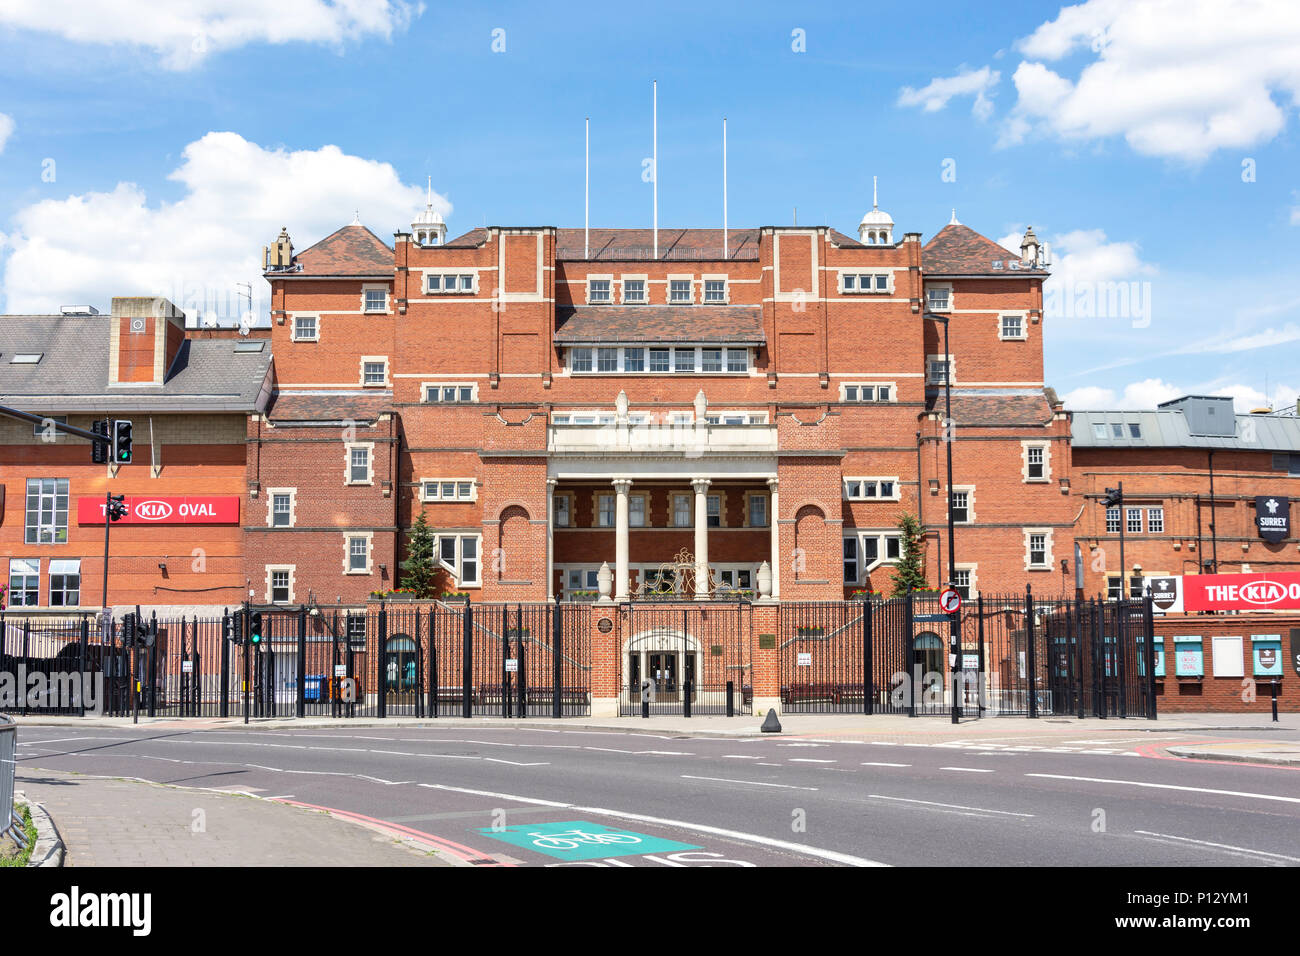 La Kia Oval Cricket Ground, Kennington Lane, Kennington, London Borough of Lambeth, Greater London, Angleterre, Royaume-Uni Banque D'Images